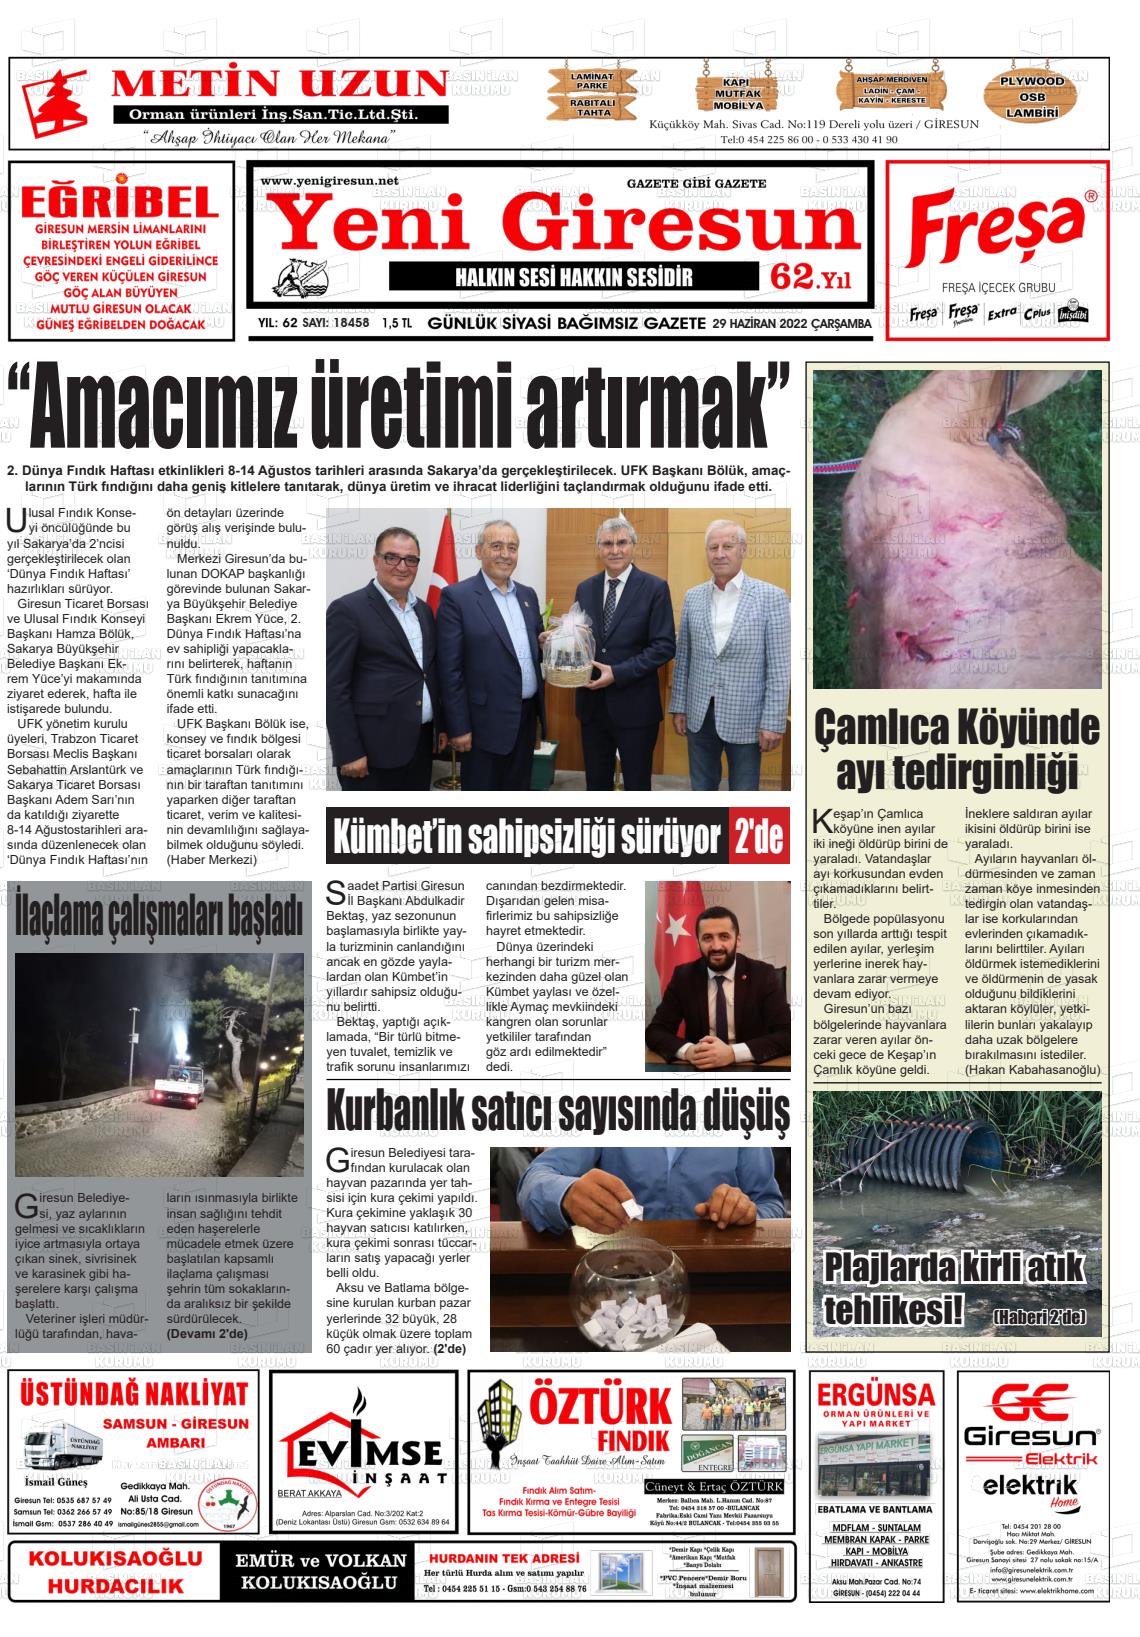 29 Haziran 2022 Yeni Giresun Gazete Manşeti